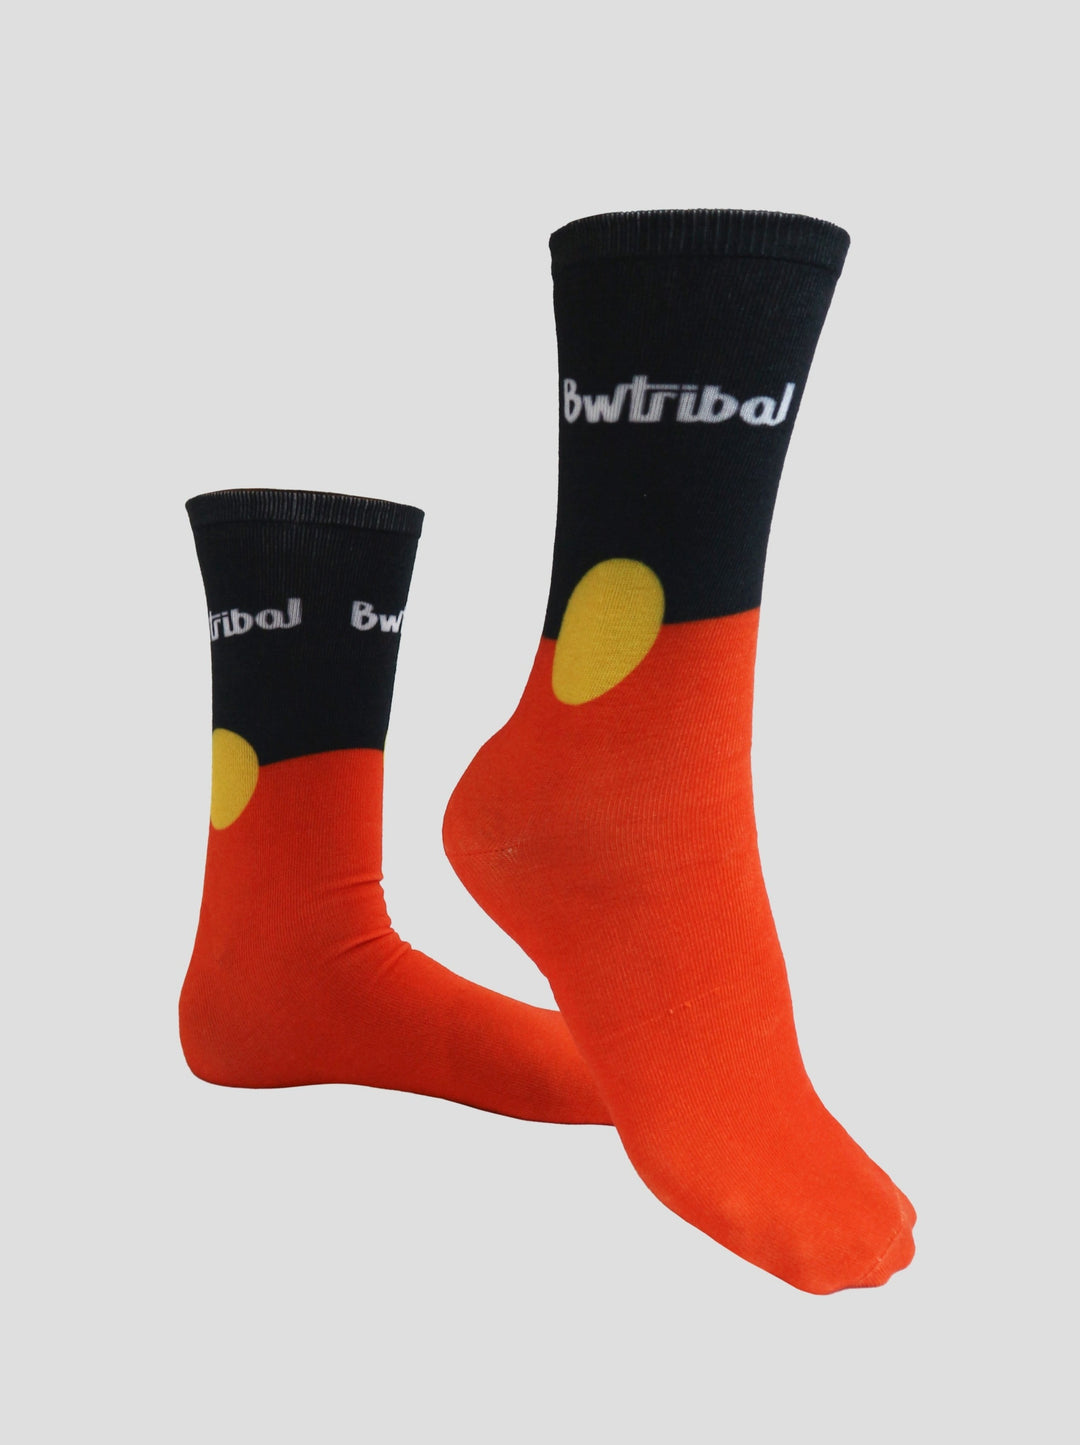 Aboriginal Flag - Unisex Socks